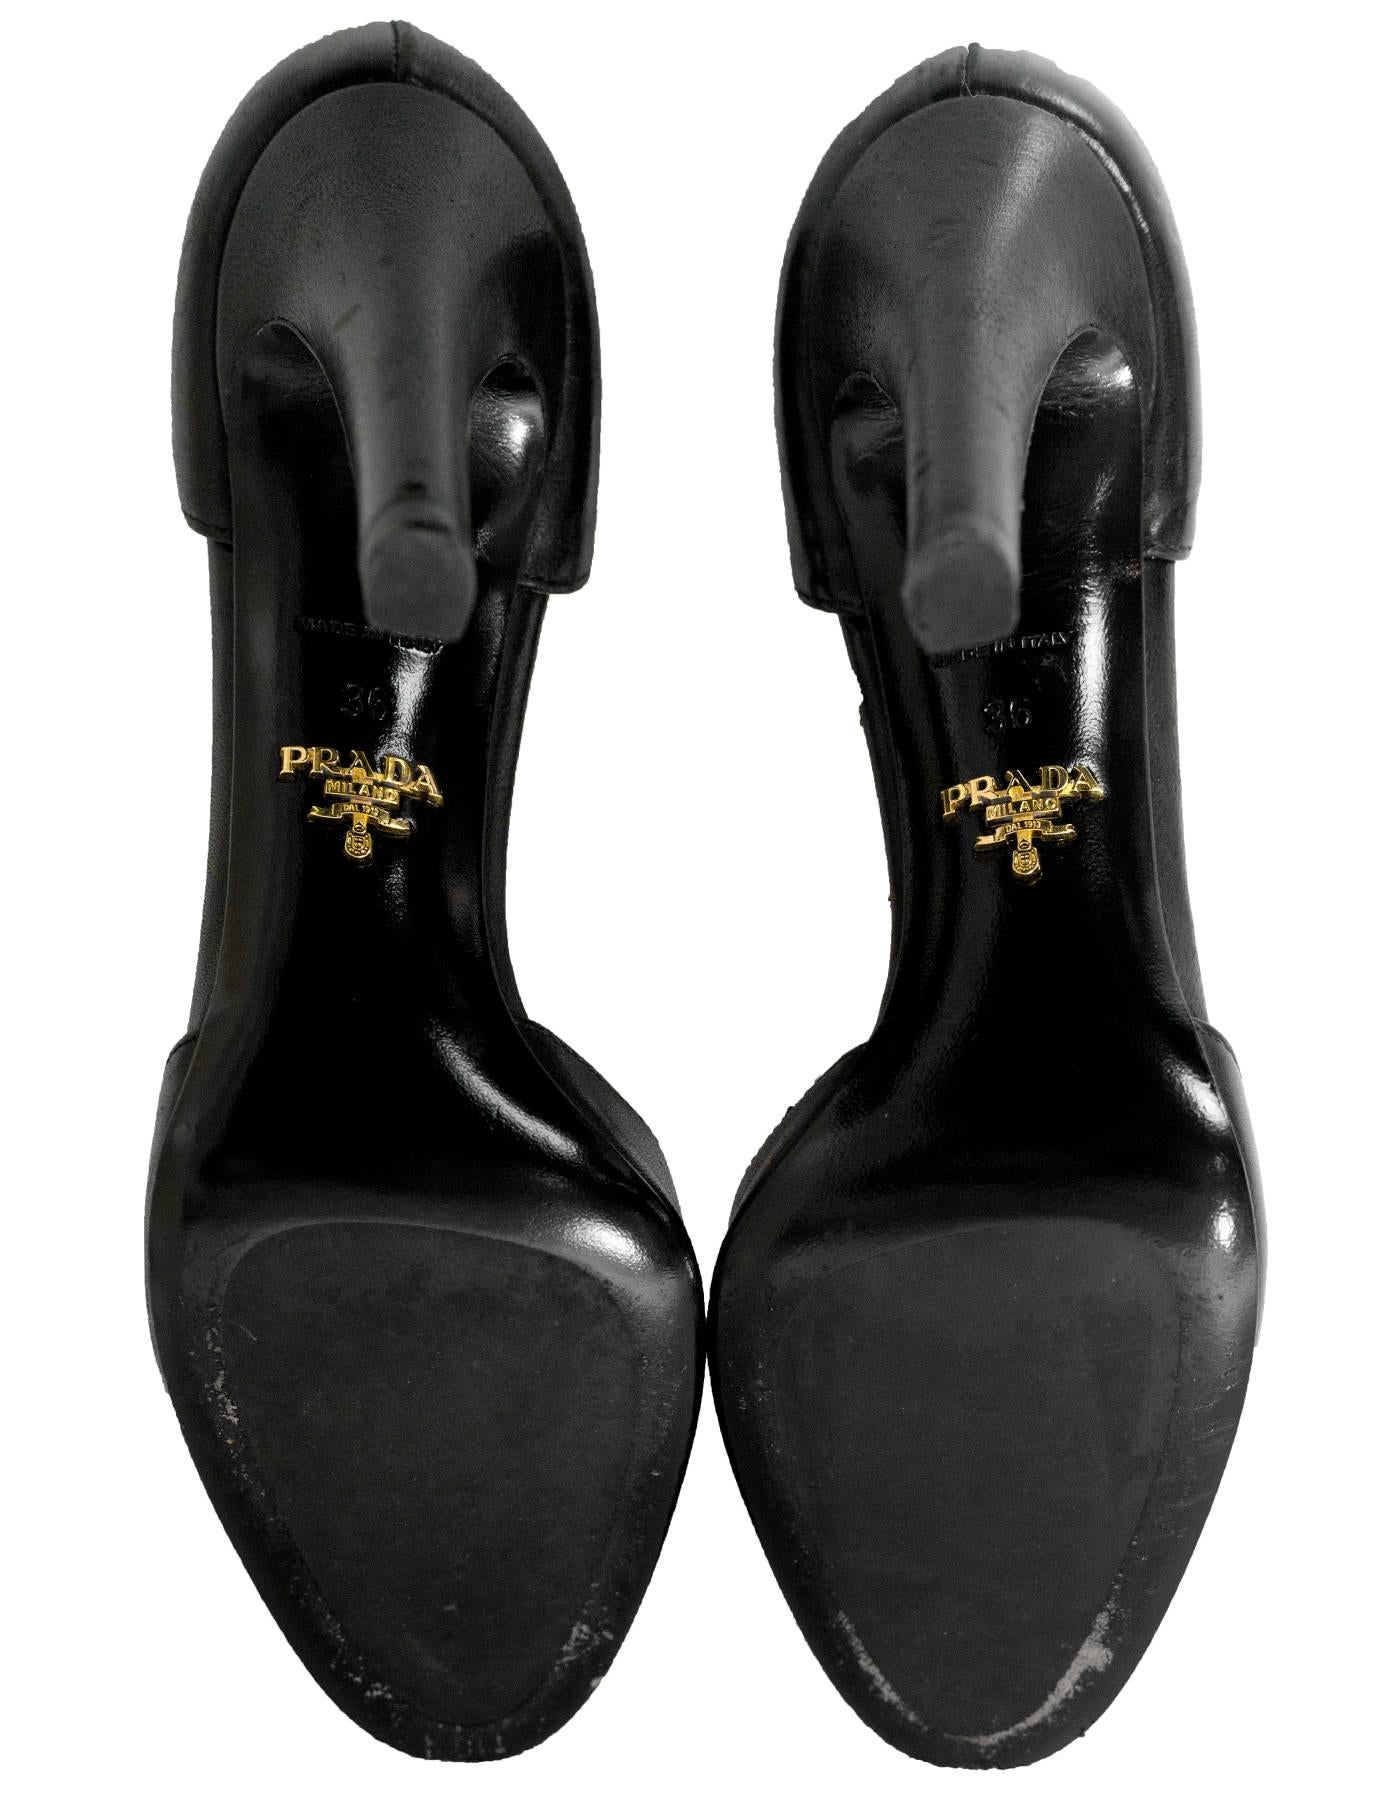 Prada Black Leather d'Orsay Pumps Sz 36 1